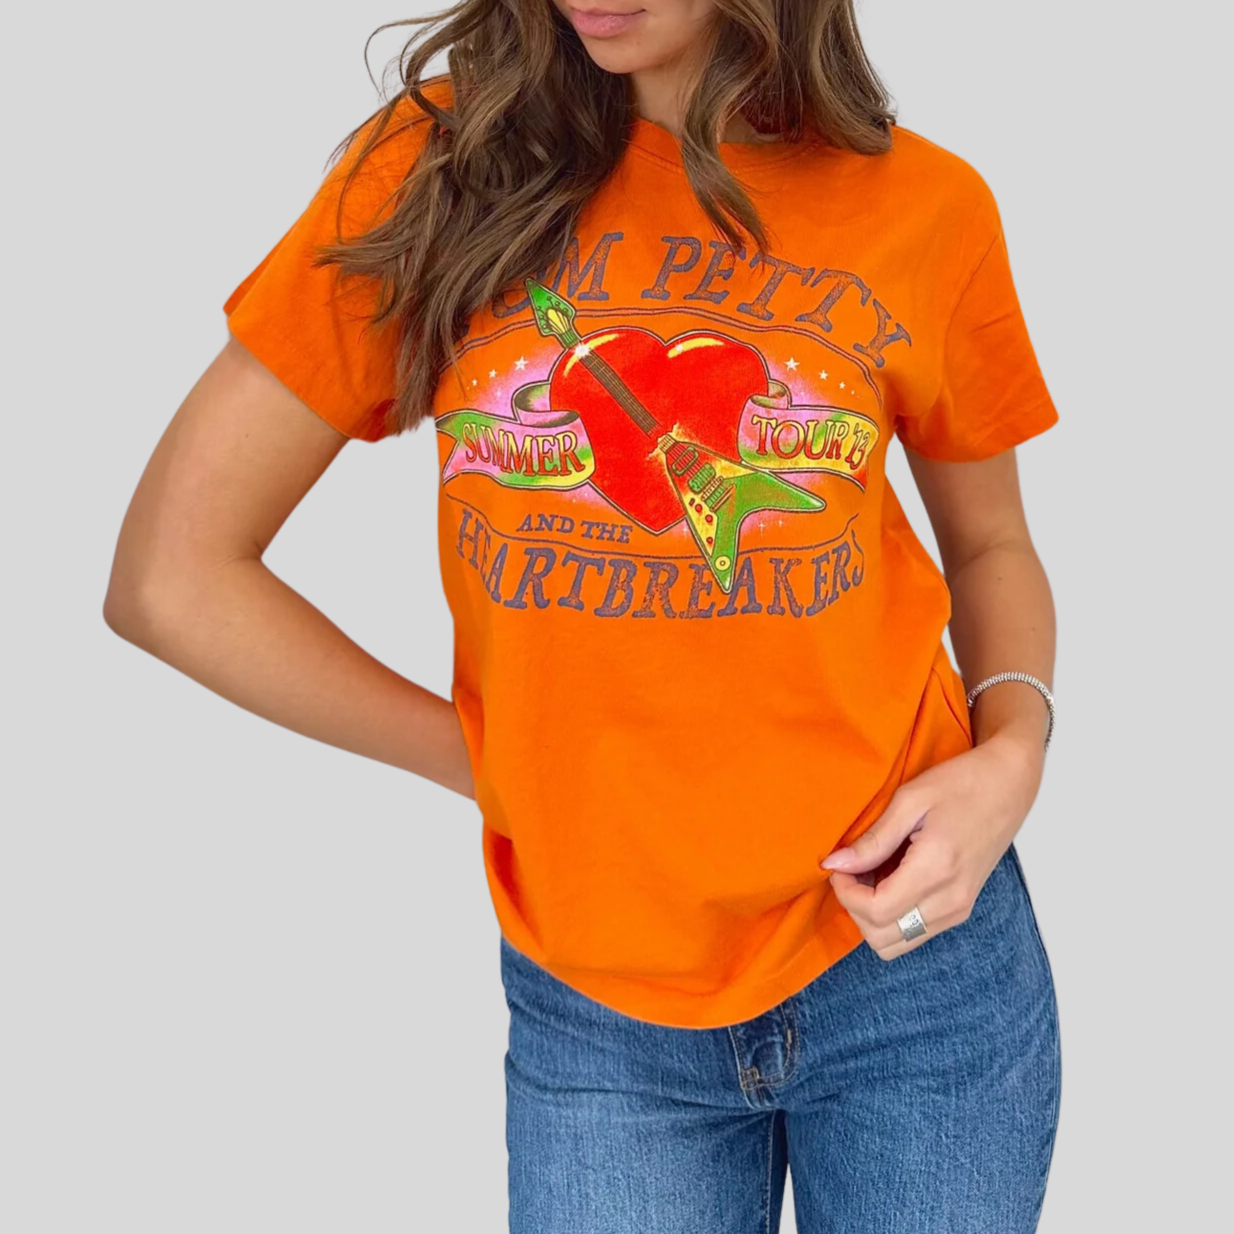 Gotstyle Fashion - Daydreamer T-Shirts Tom Petty Summer Tour '13 Rocker Tee - Orange